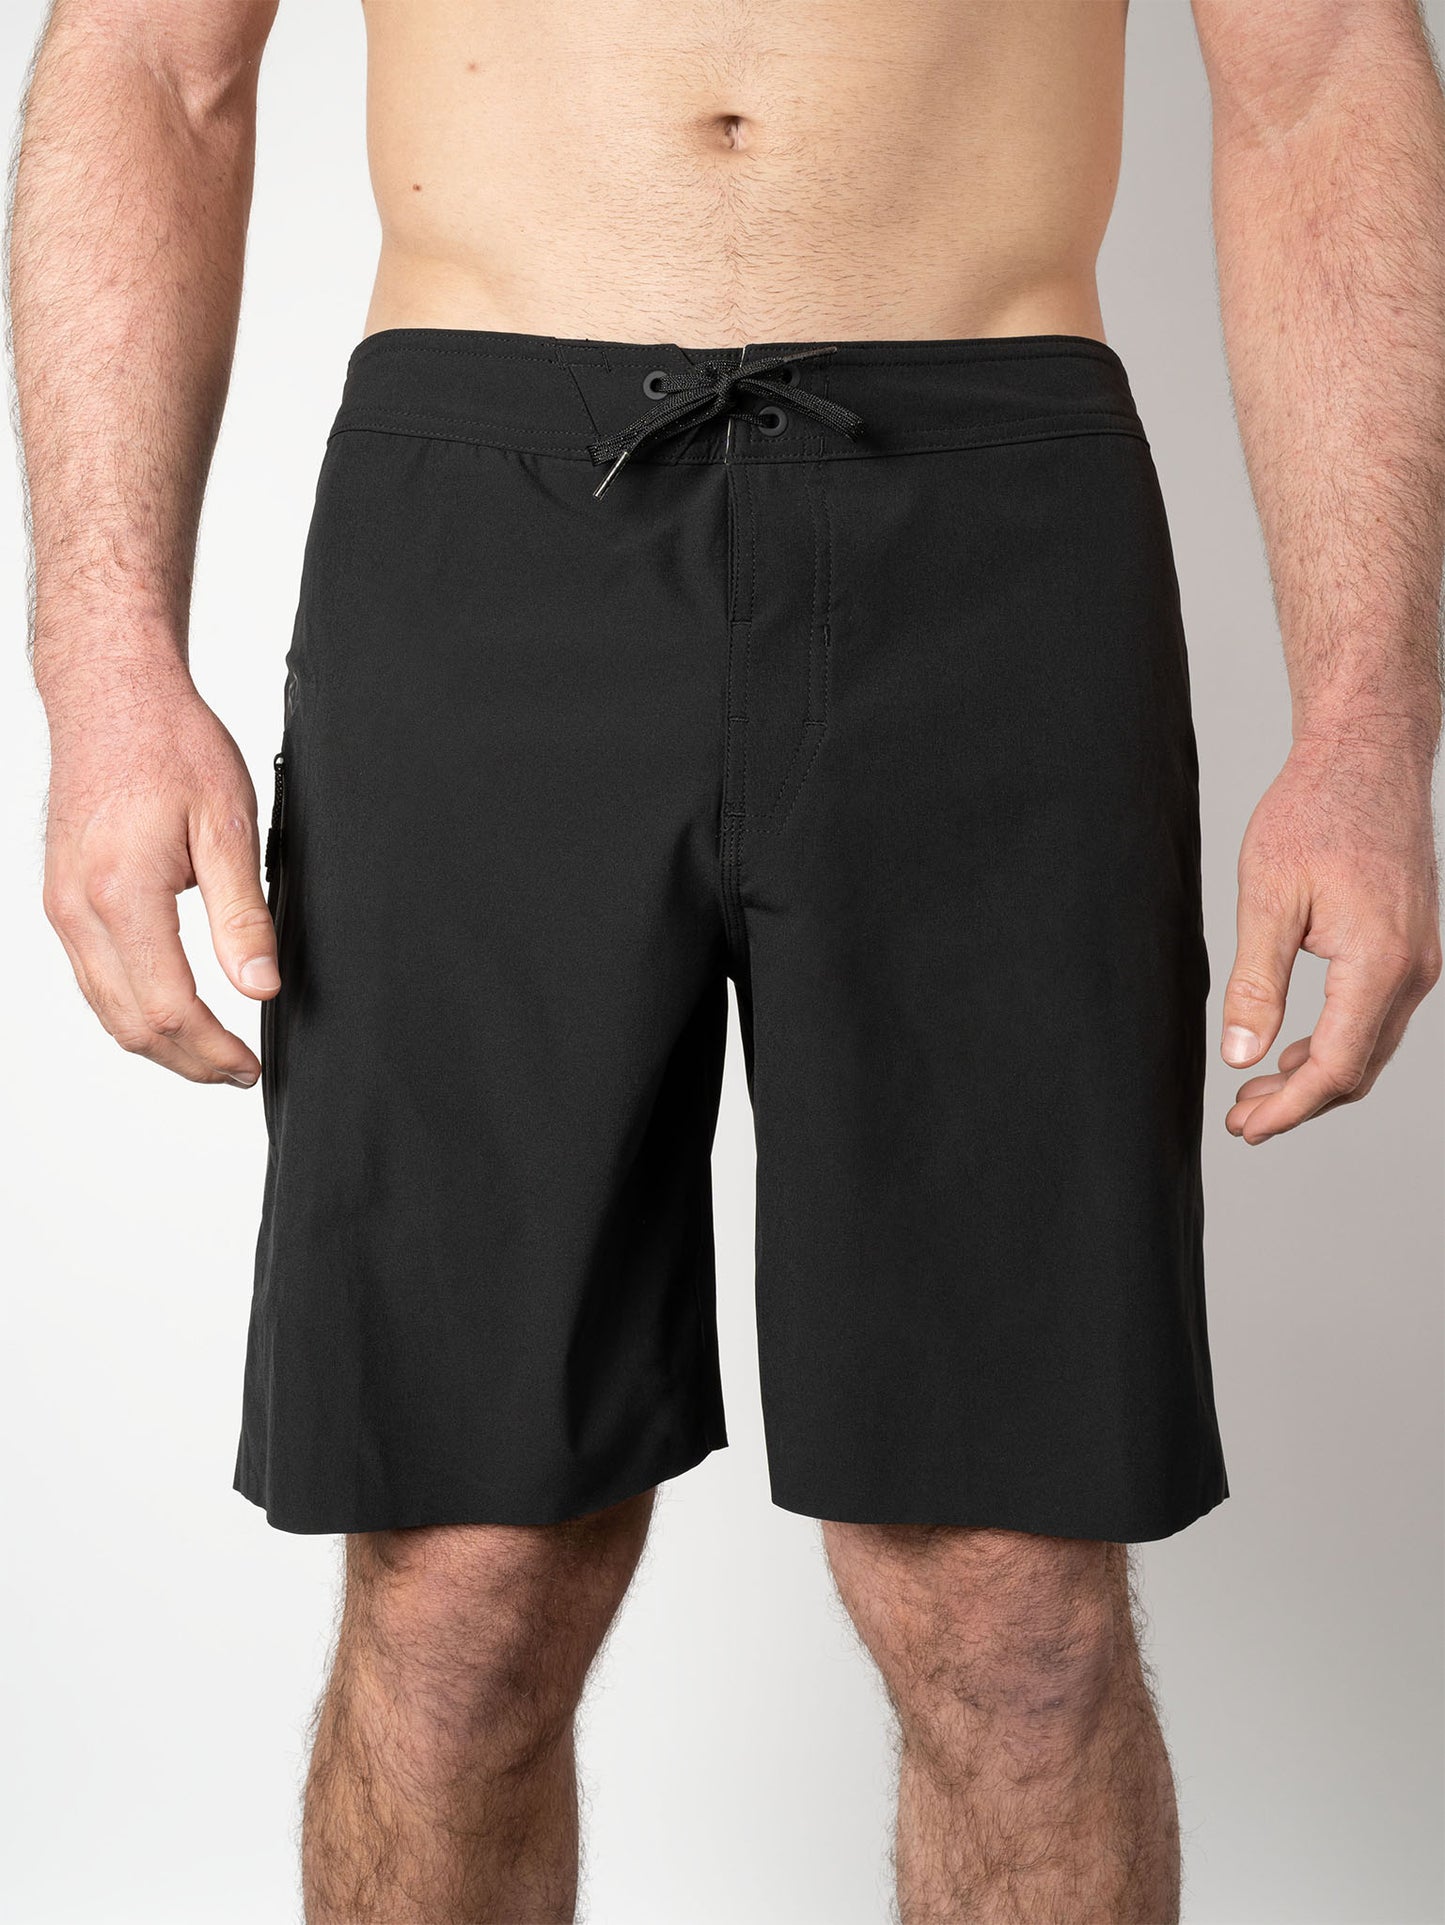 Xcel Drylock Mens 18.5 Boardshorts - Charcoal Camo